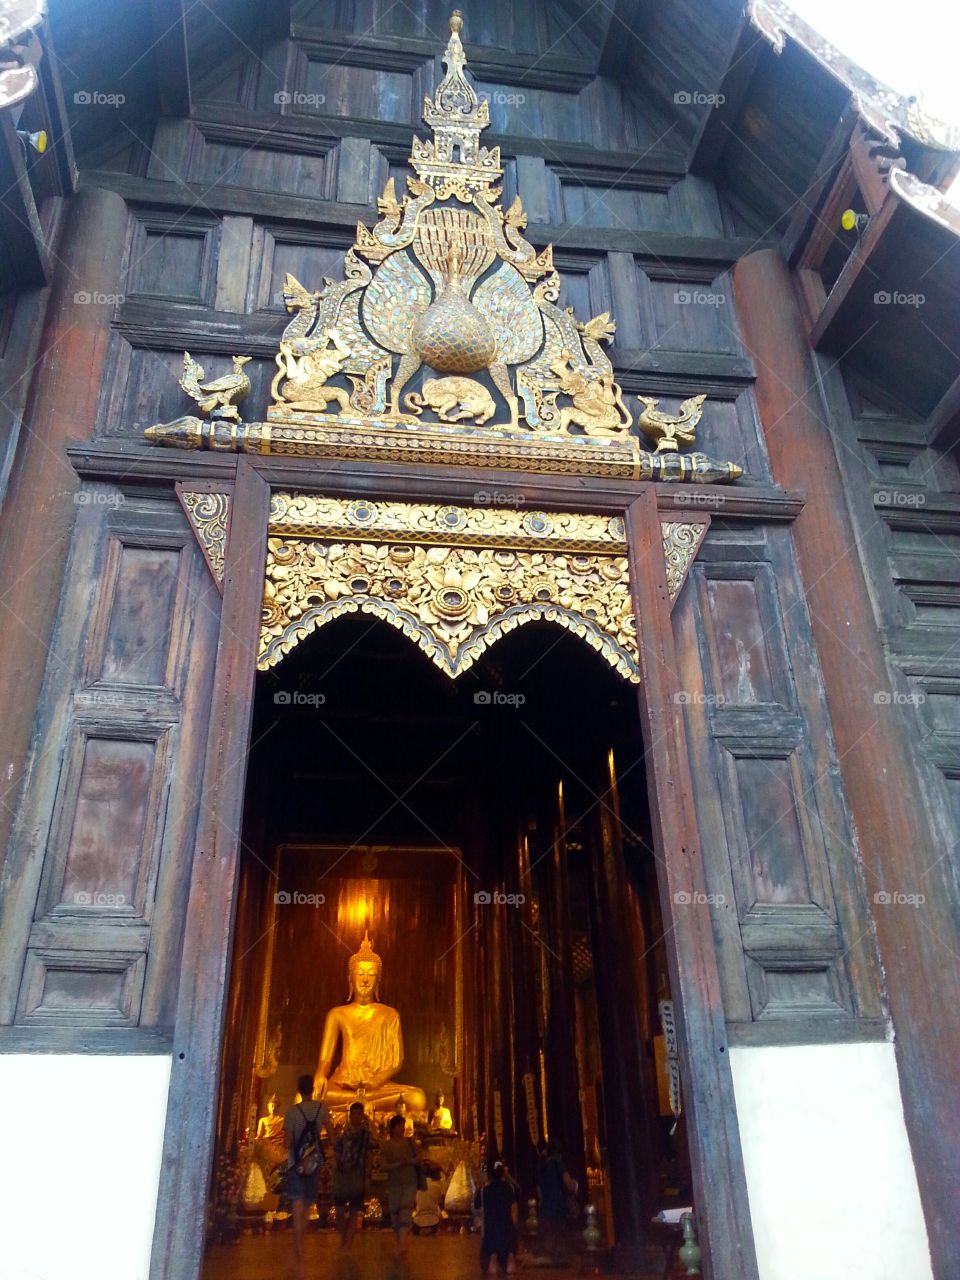 Doorway of Buddhist temple in Thailand